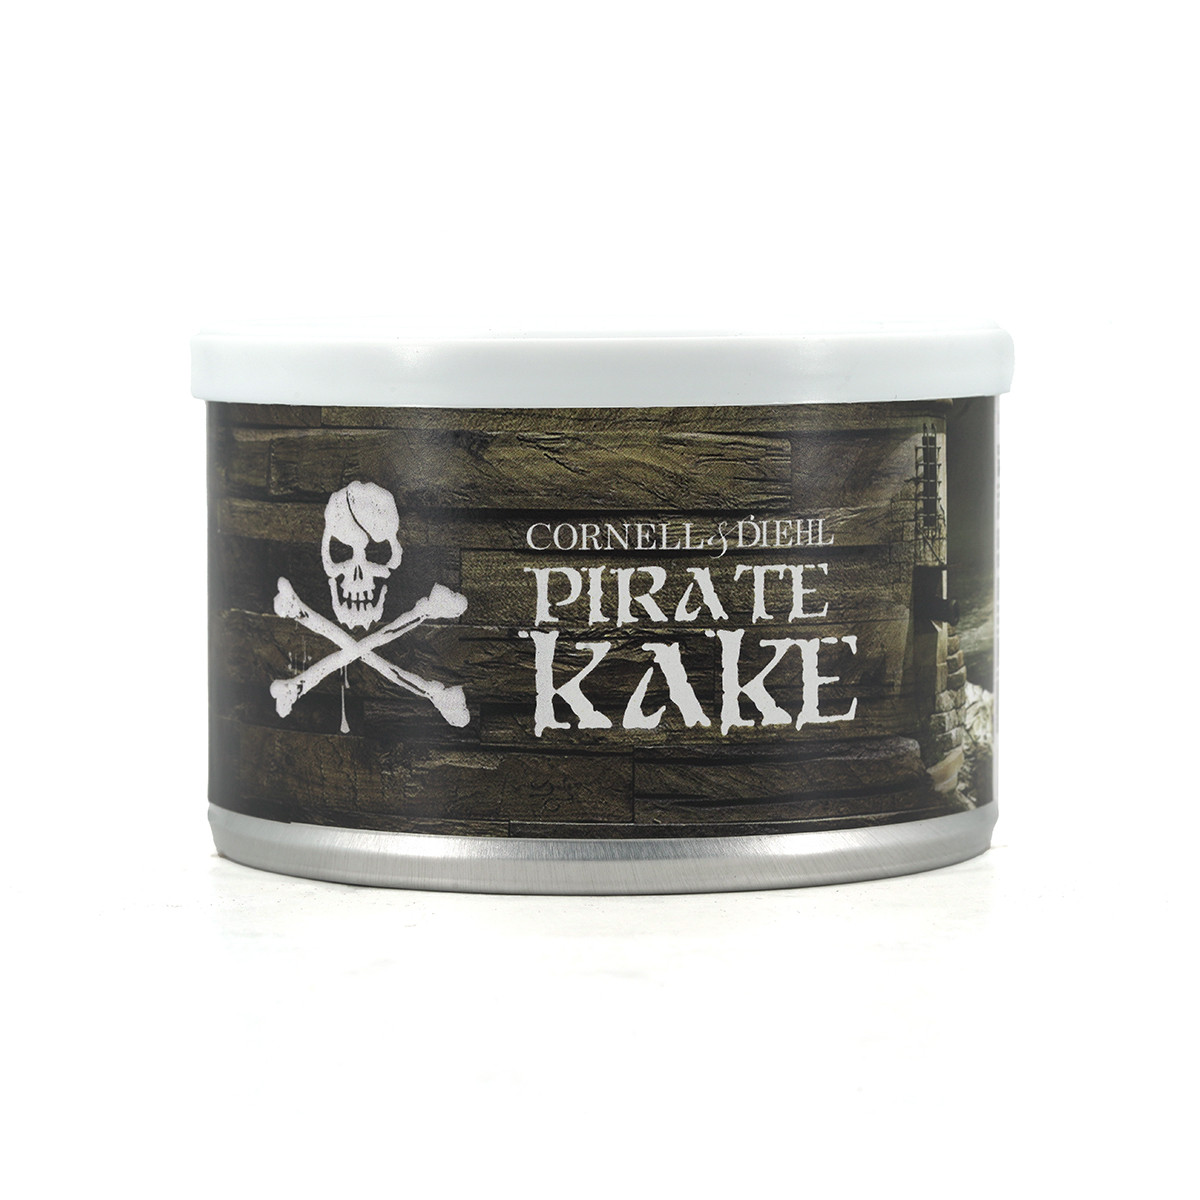 Cornell & Diehl Pirate Kake 康奈爾與迪爾海盜凱克